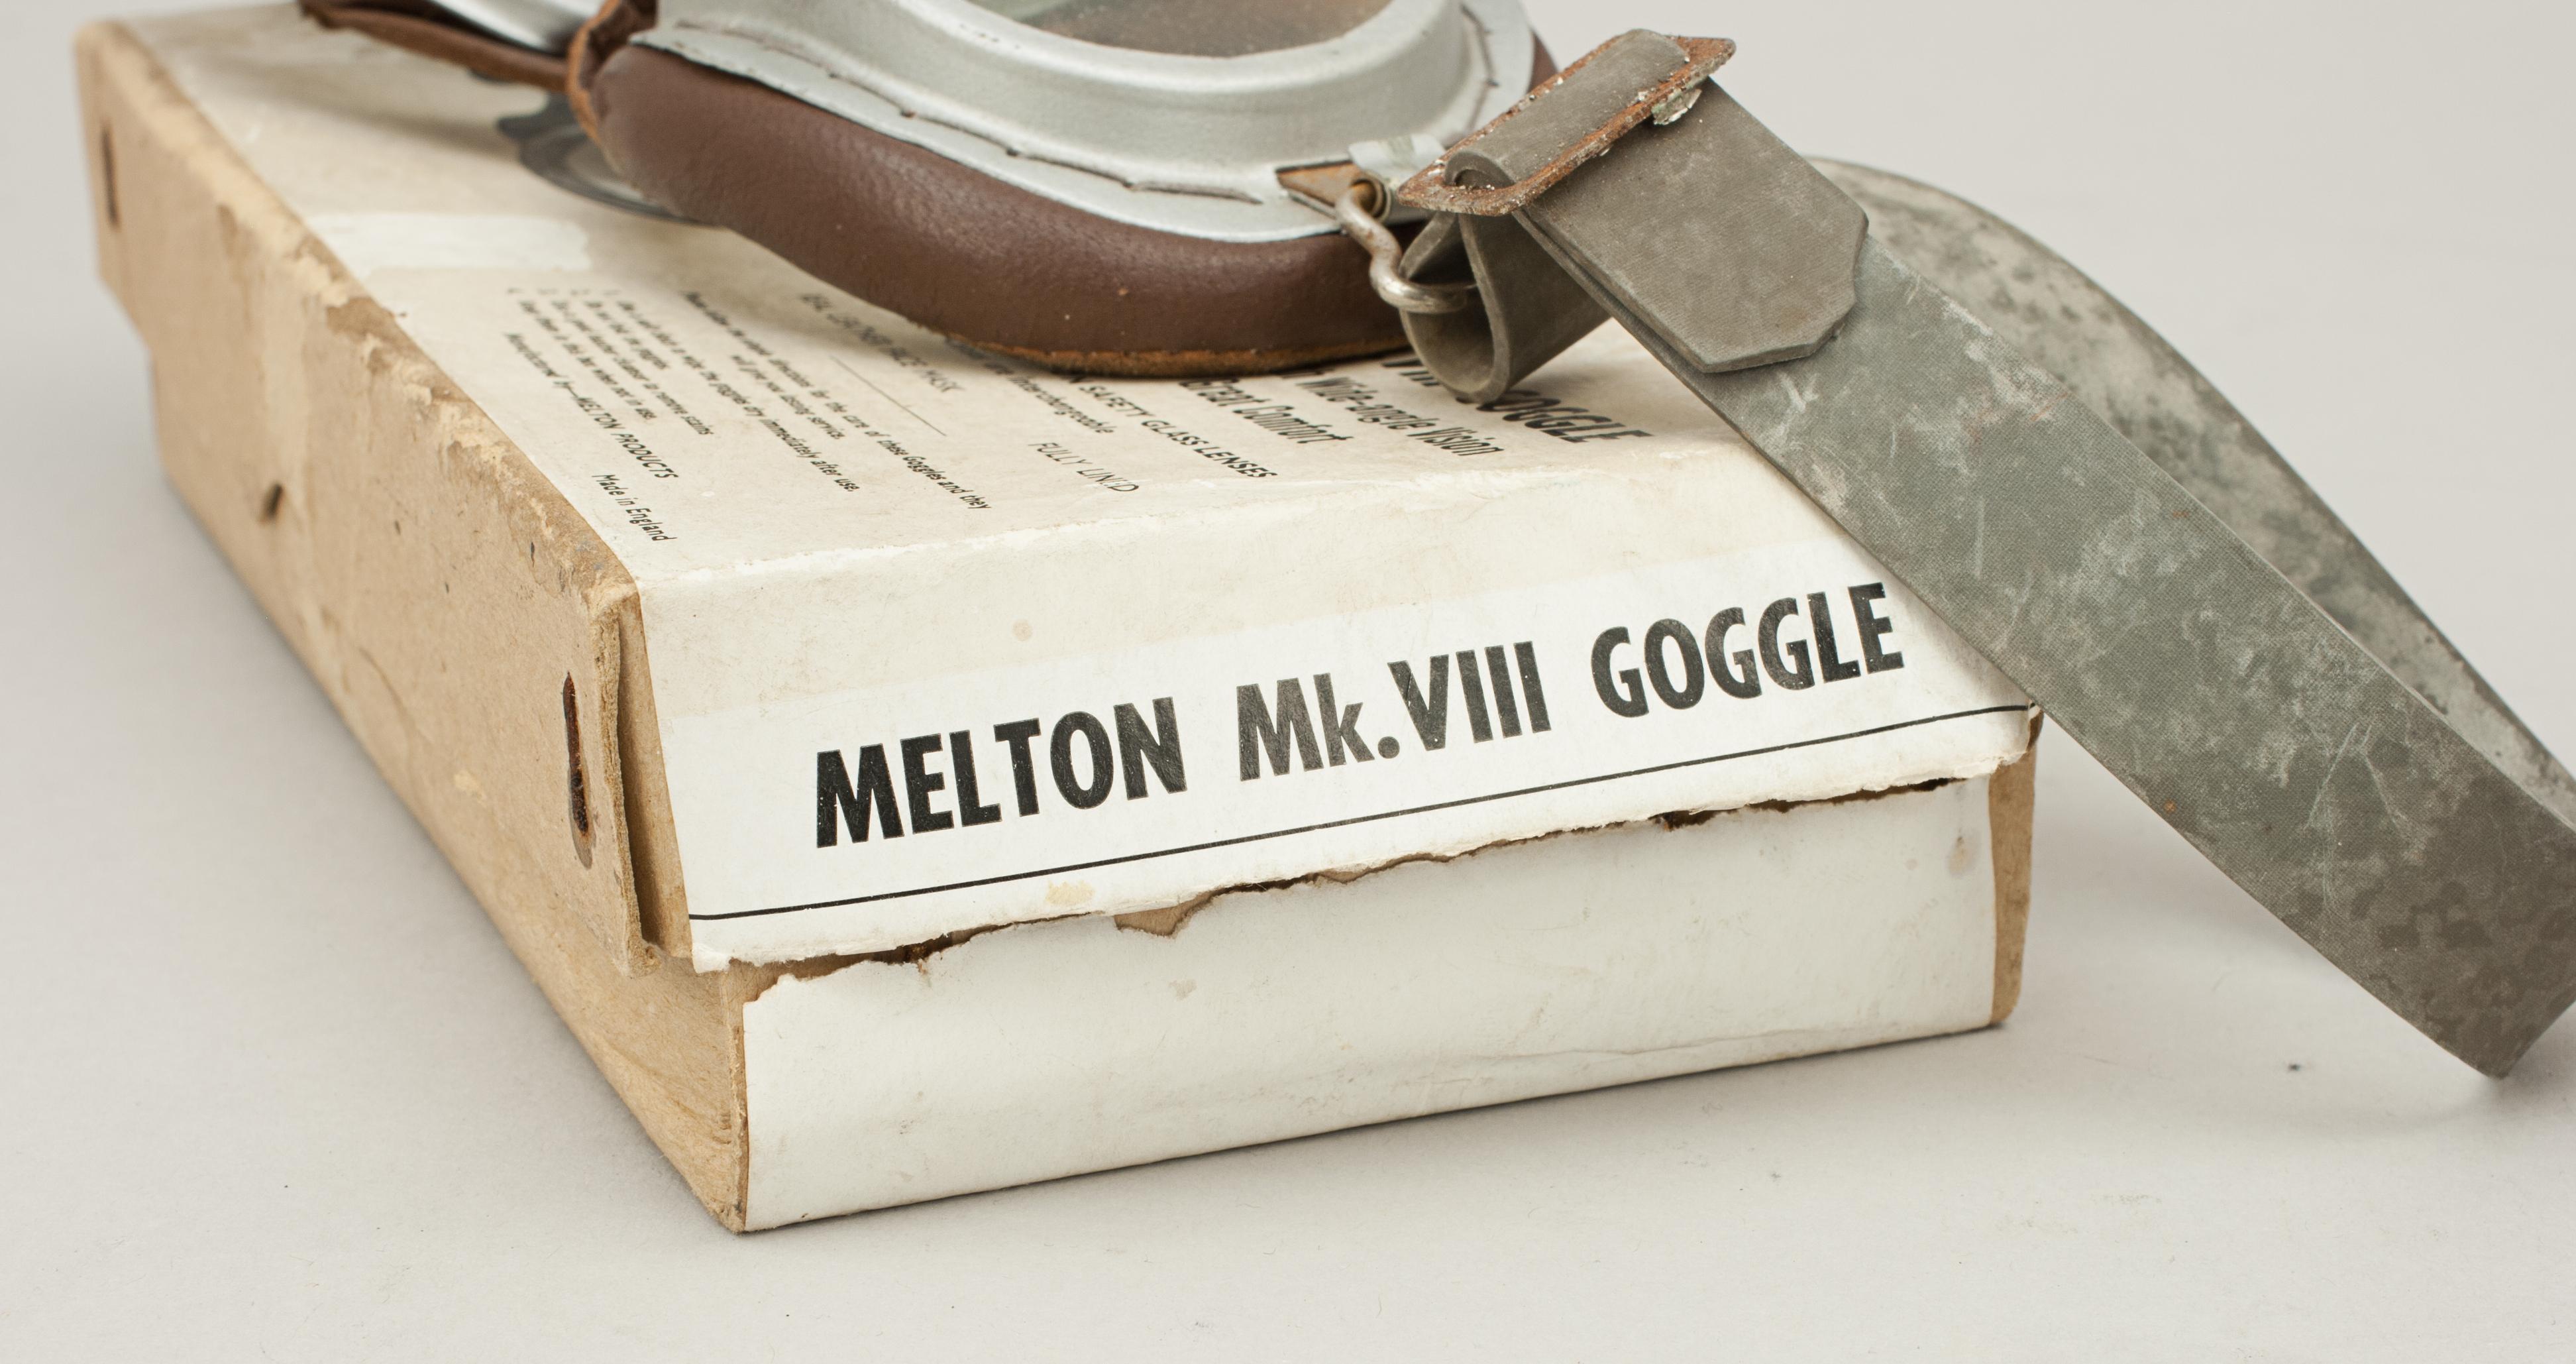 Motorcycle, Motoring Goggles Melton Mk. Viii Goggles in Original Cardboard Box 2